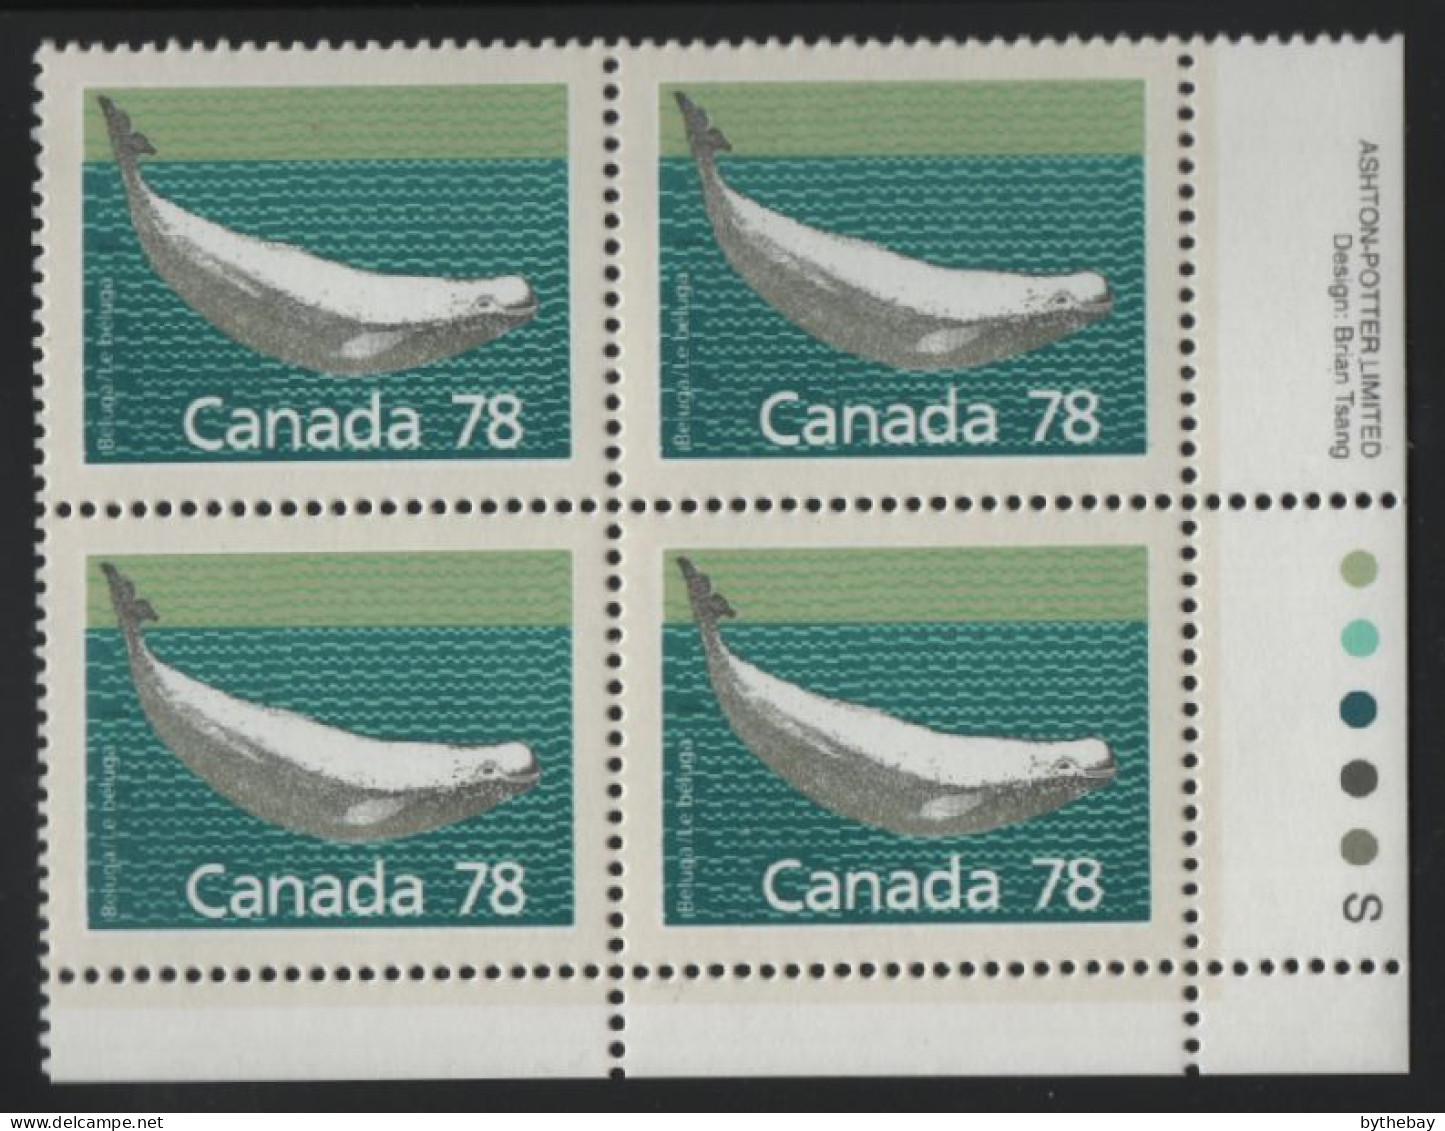 Canada 1988-92 MNH Sc 1179 78c Beluga Whale LR Plate Block - Plate Number & Inscriptions